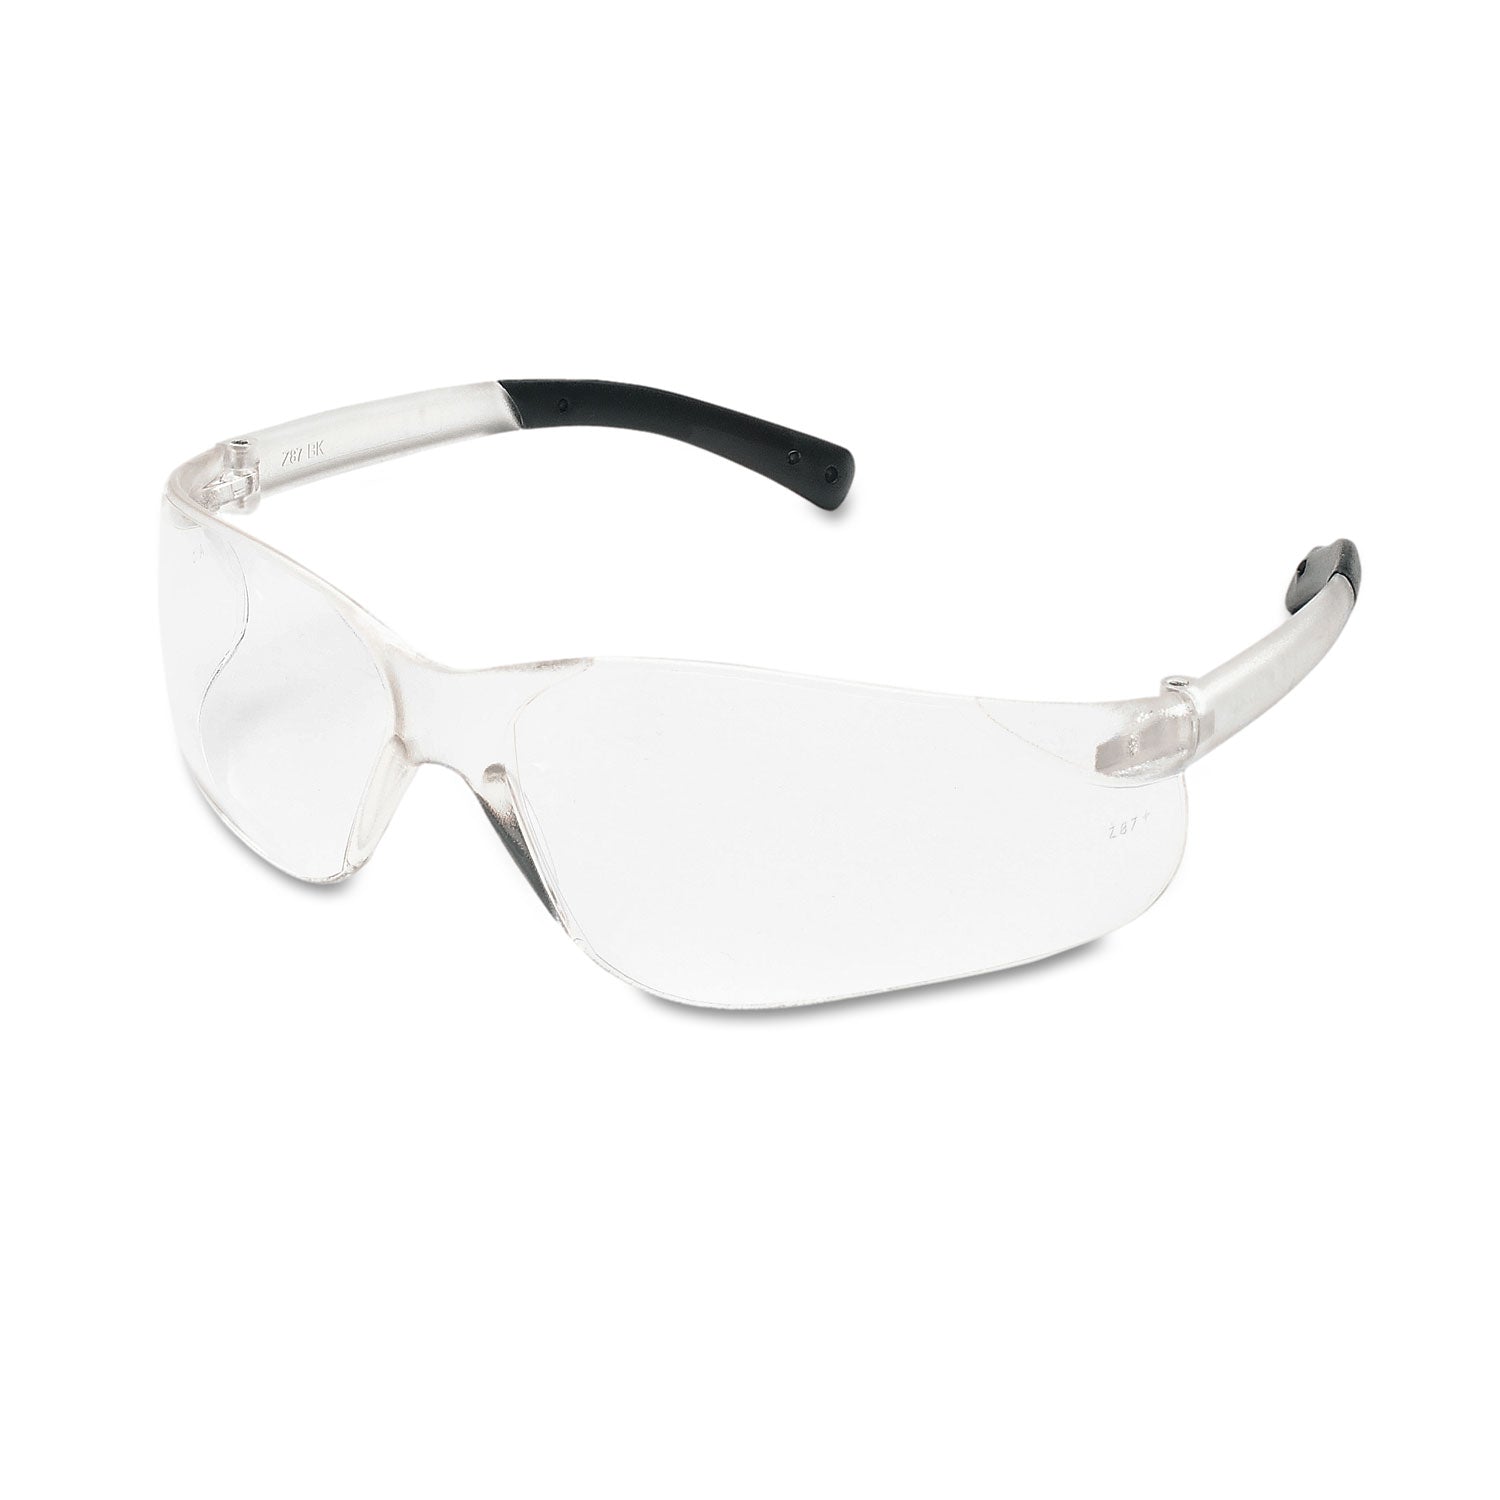 BearKat Safety Glasses, Wraparound, Black Frame/Clear Lens - 